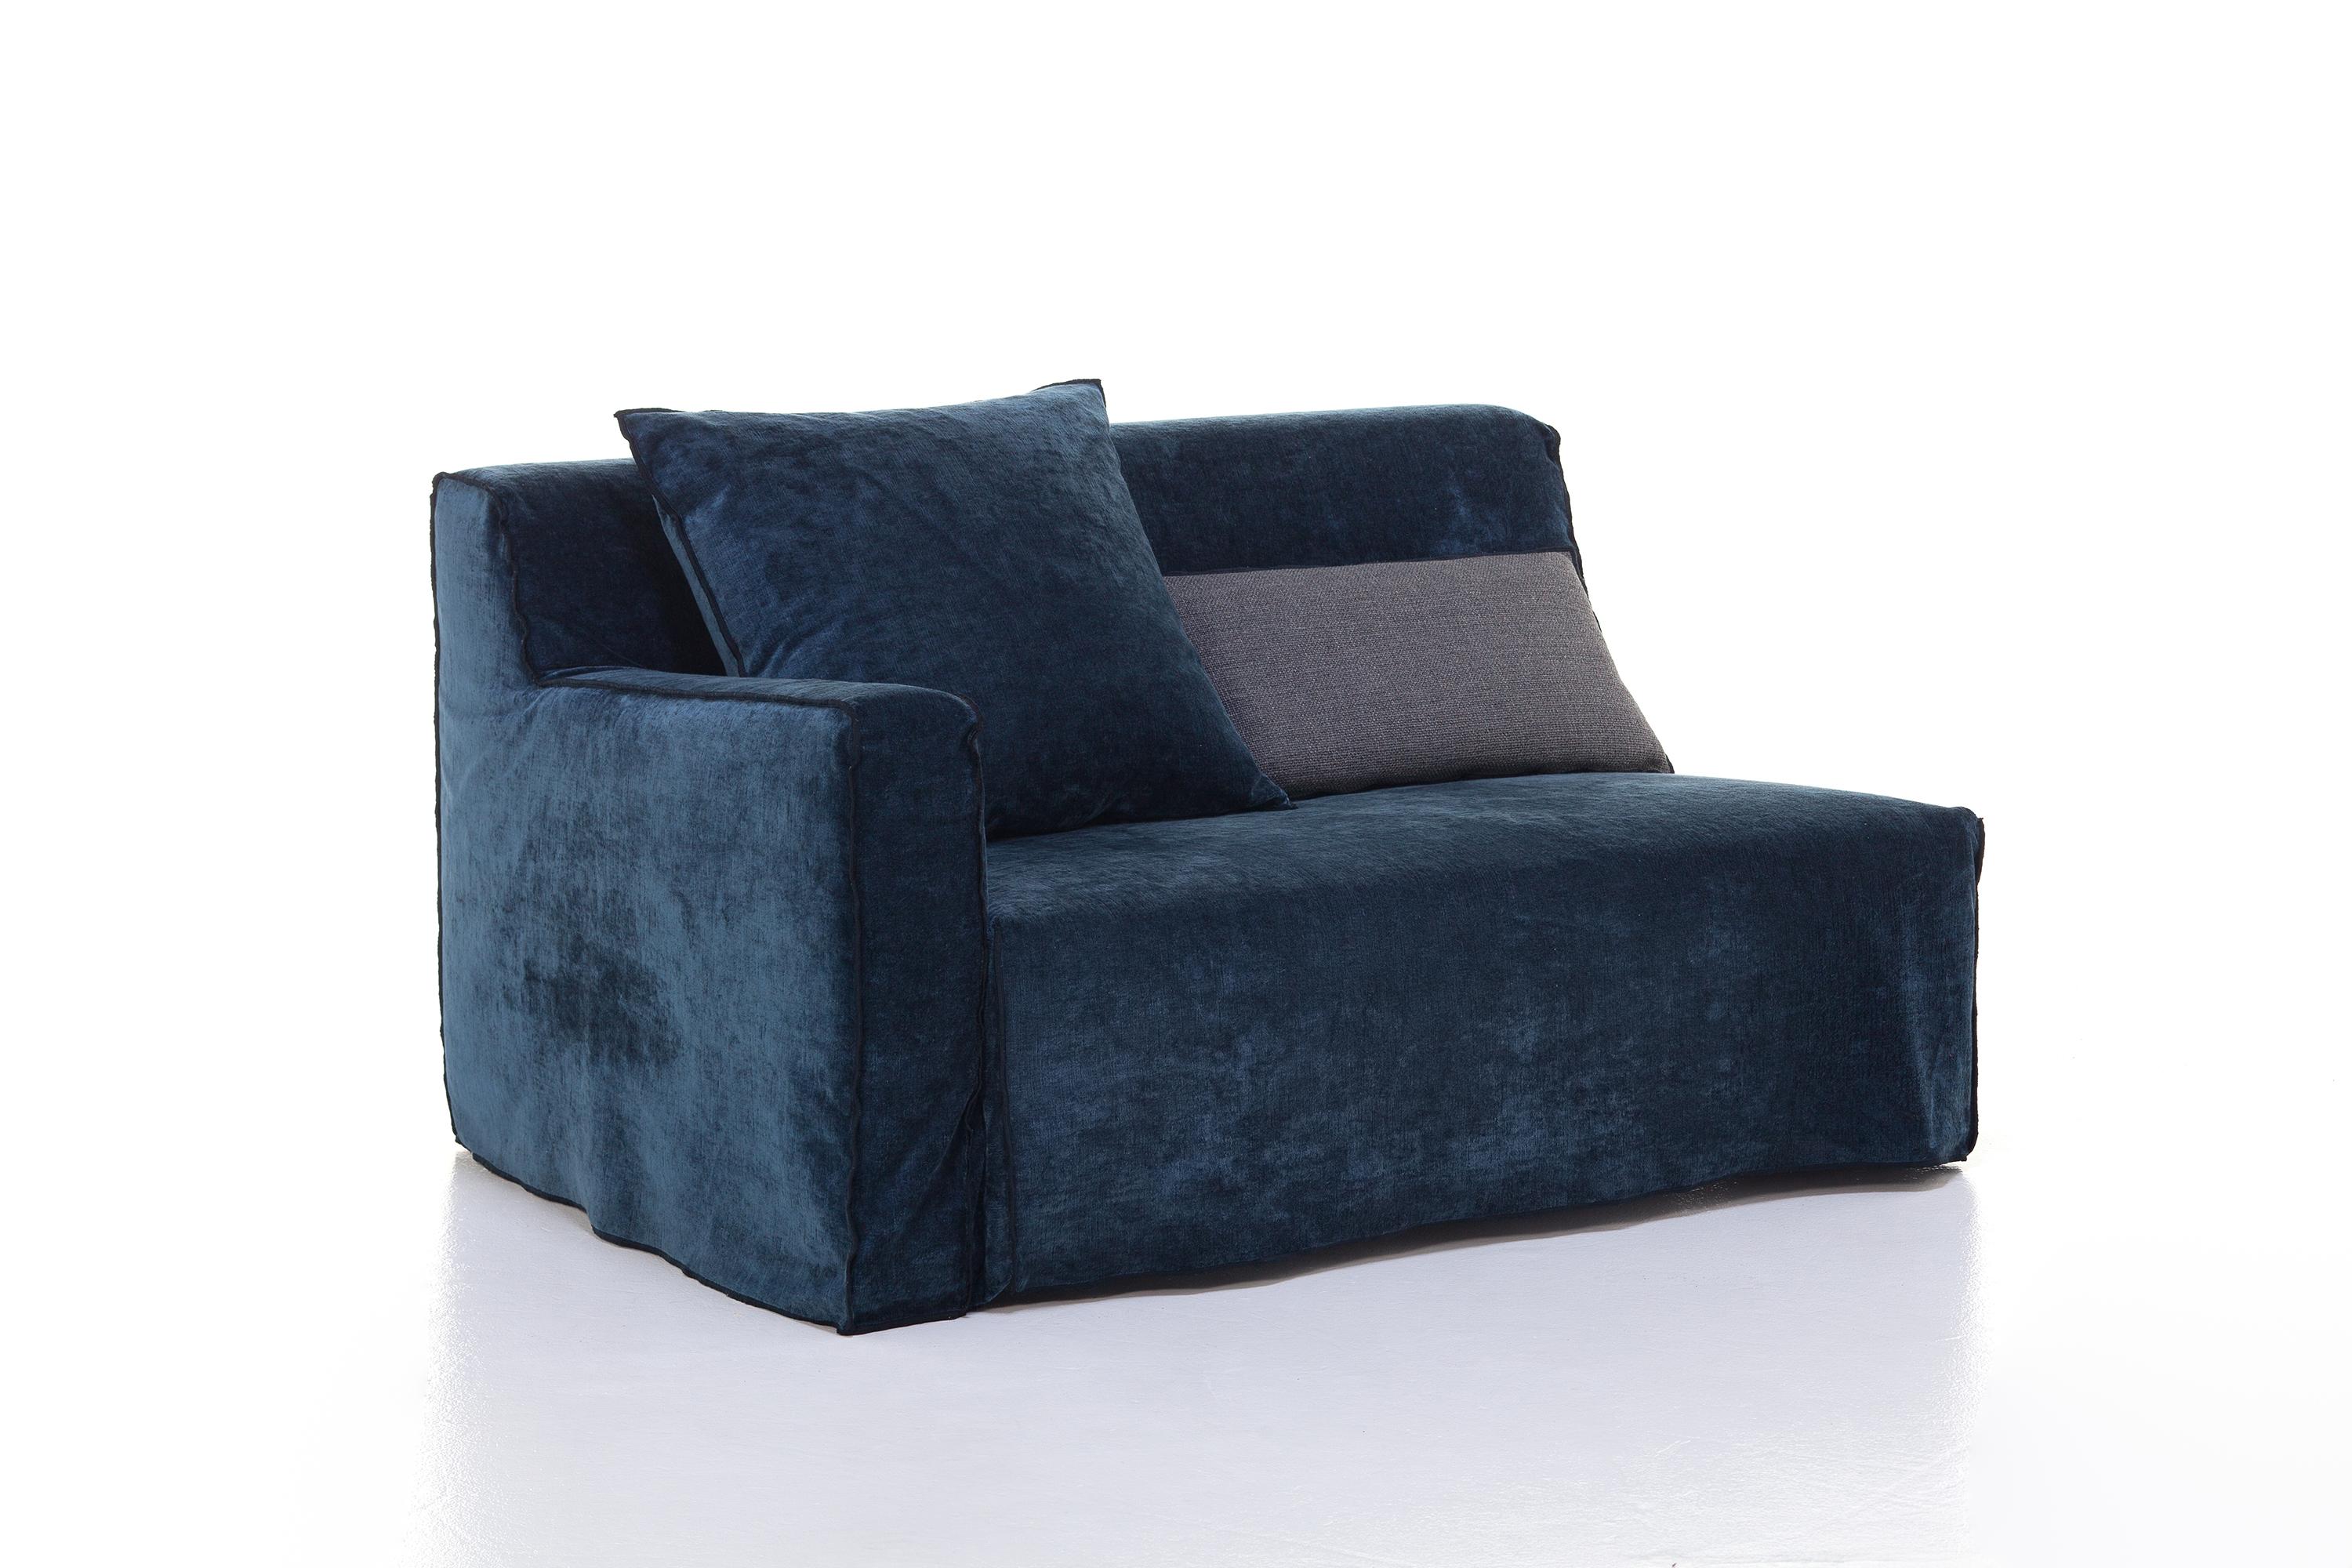 Italian Gervasoni More 07 Left Armrest Modular Sofa in Midnight Upholstery, Paola Navone